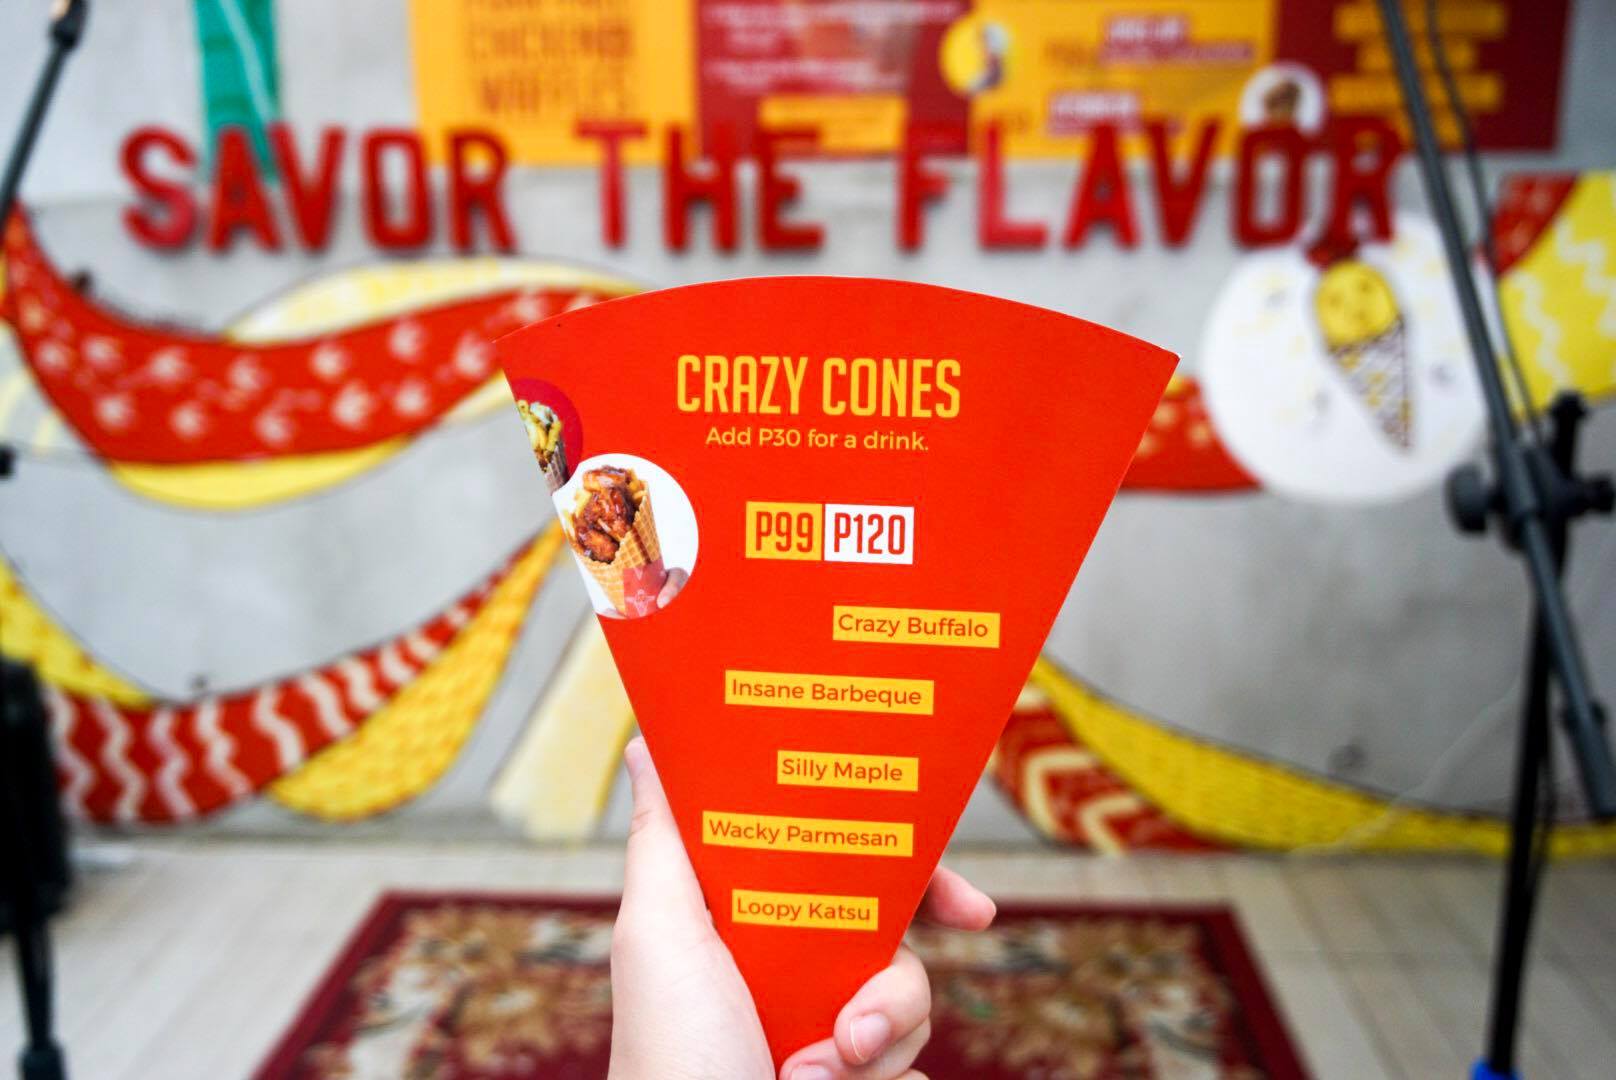 Crazy Cone menu. Photo: Kaka Corral